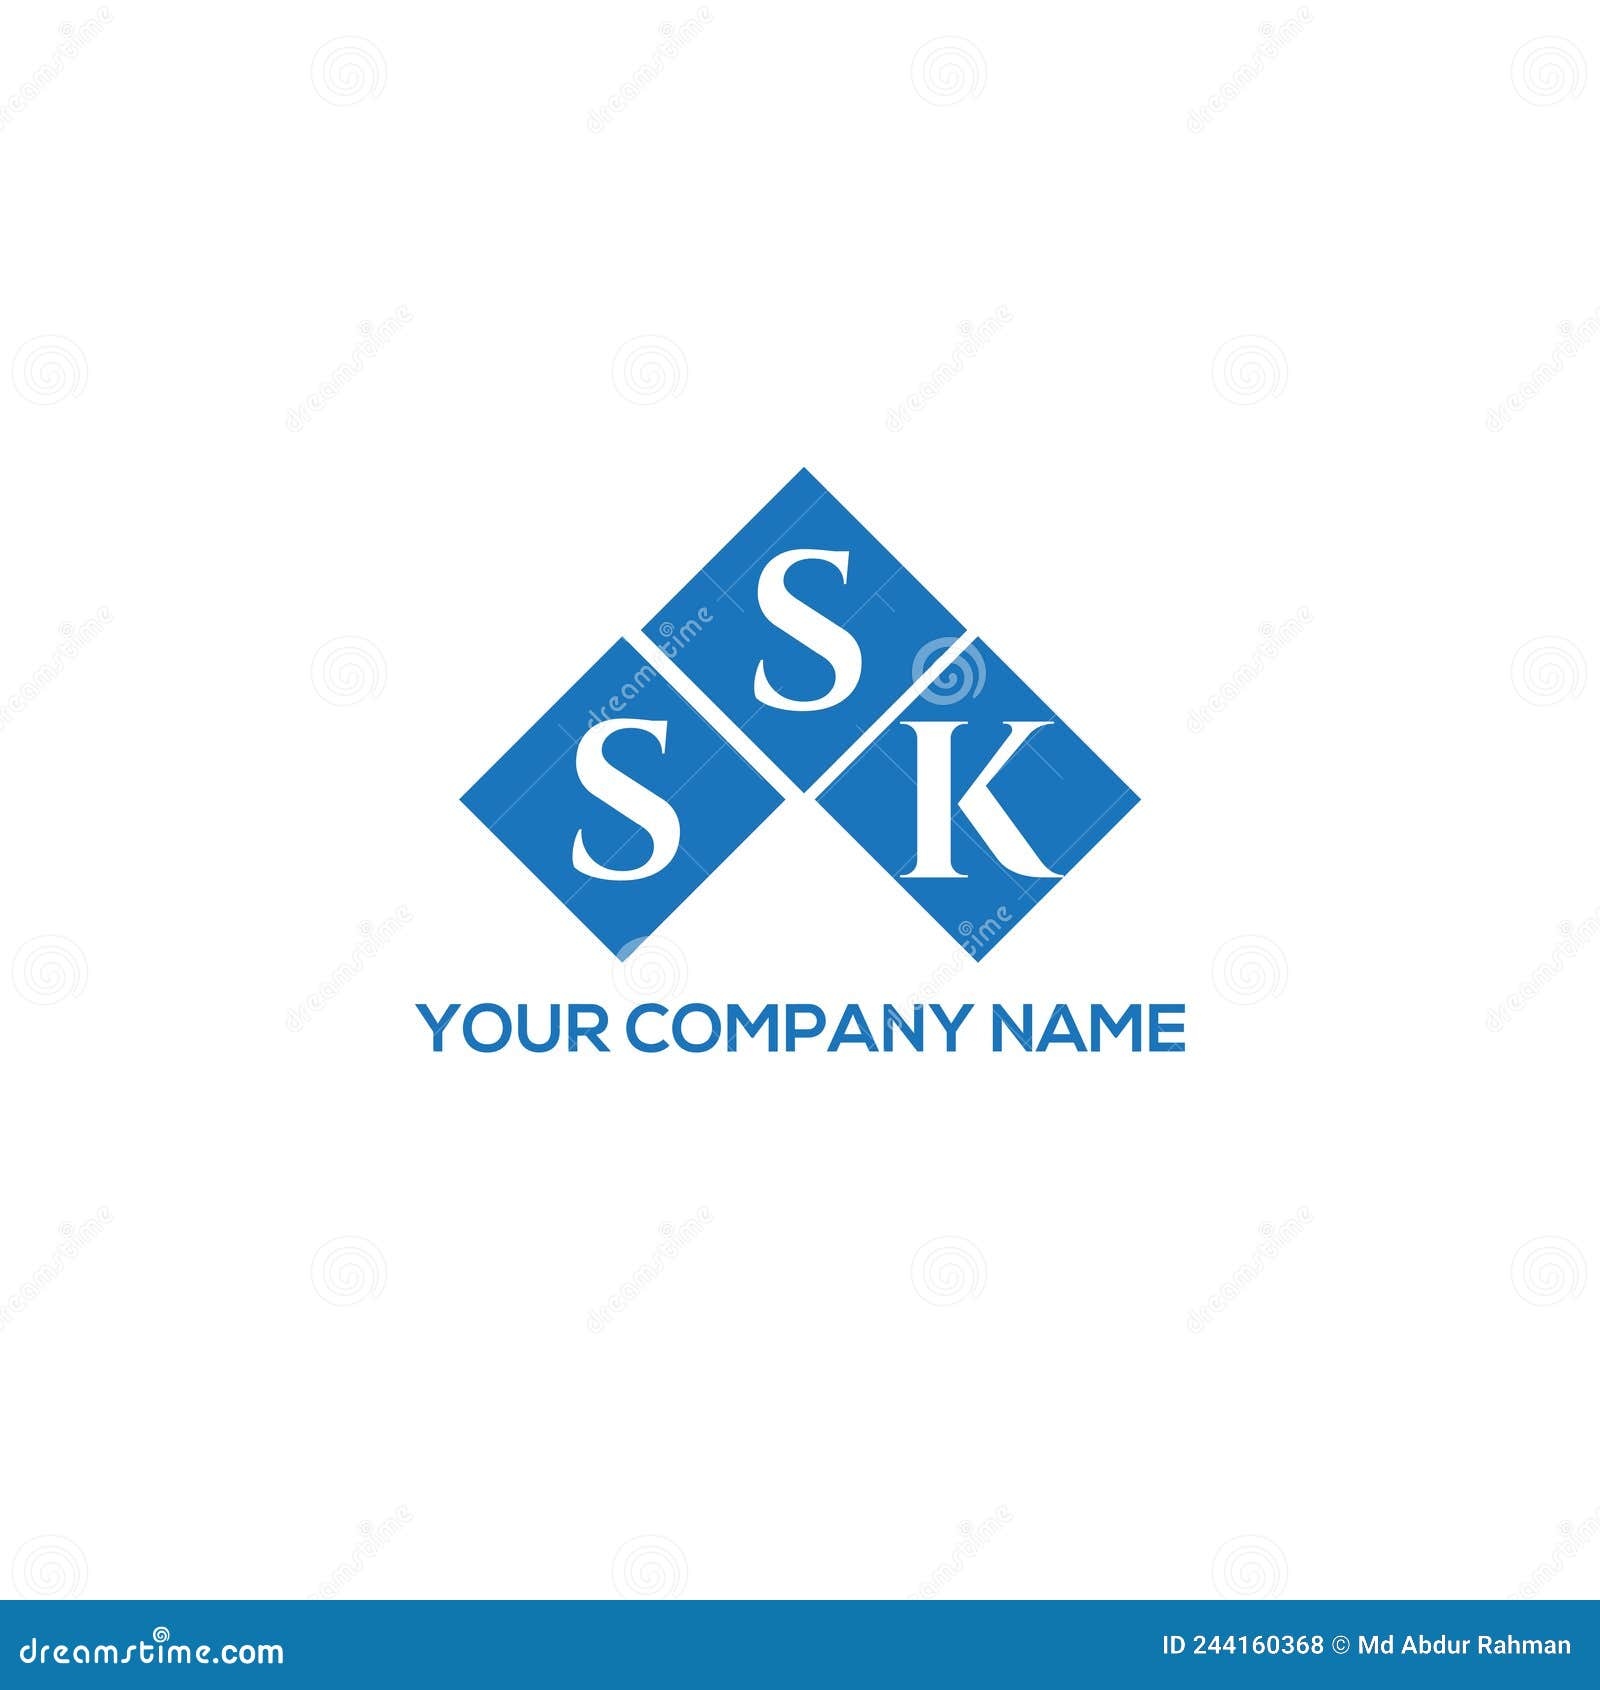 ssk letter logo  on white background. ssk creative initials letter logo concept. ssk letter 